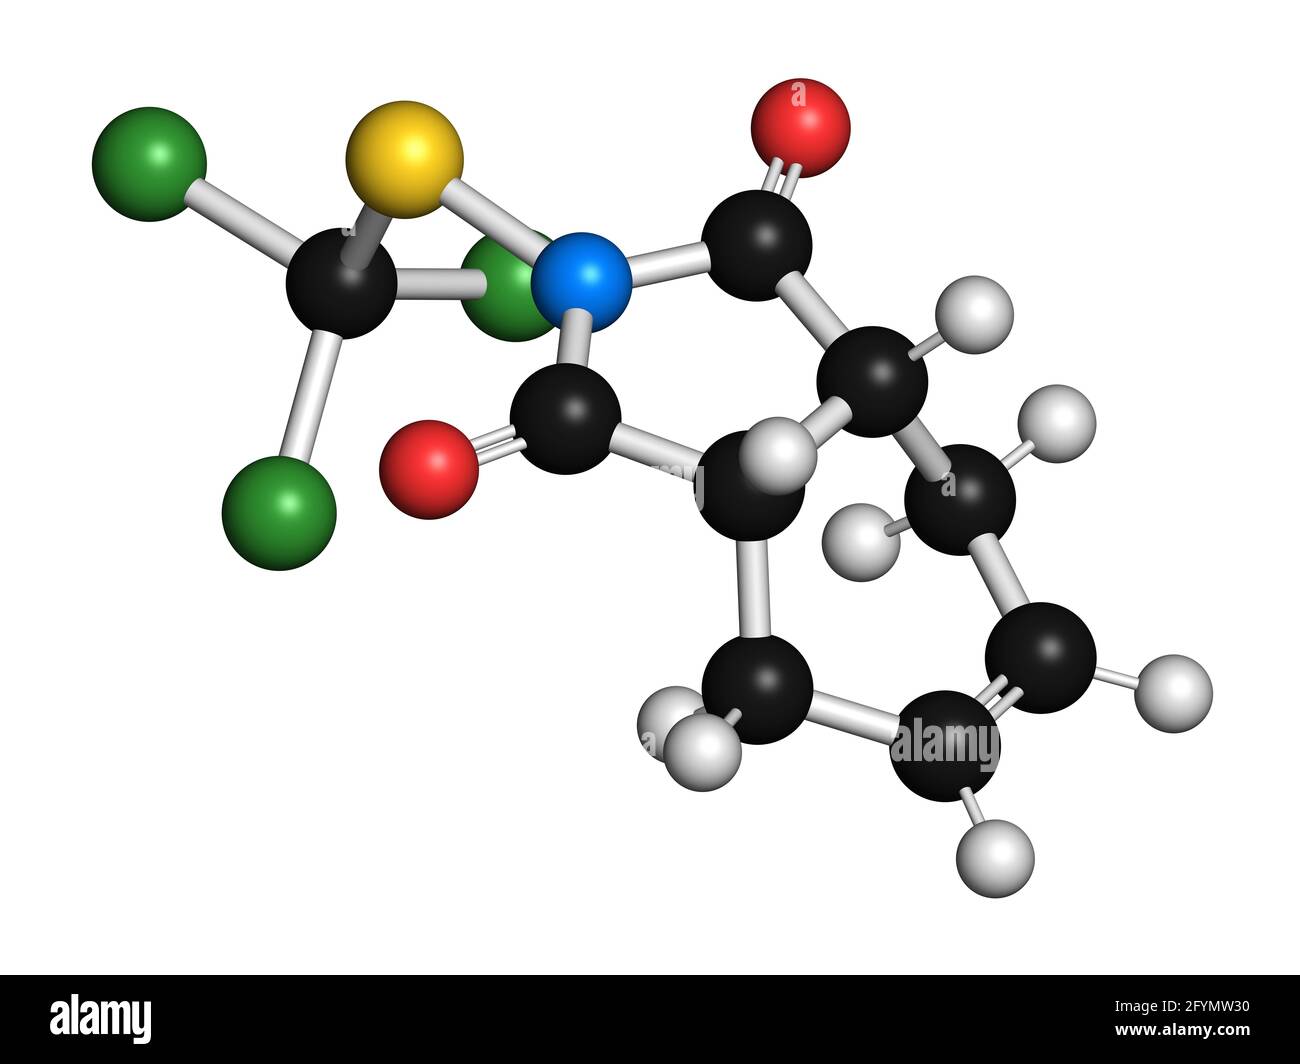 Captan fungicide molecule, illustration Stock Photo